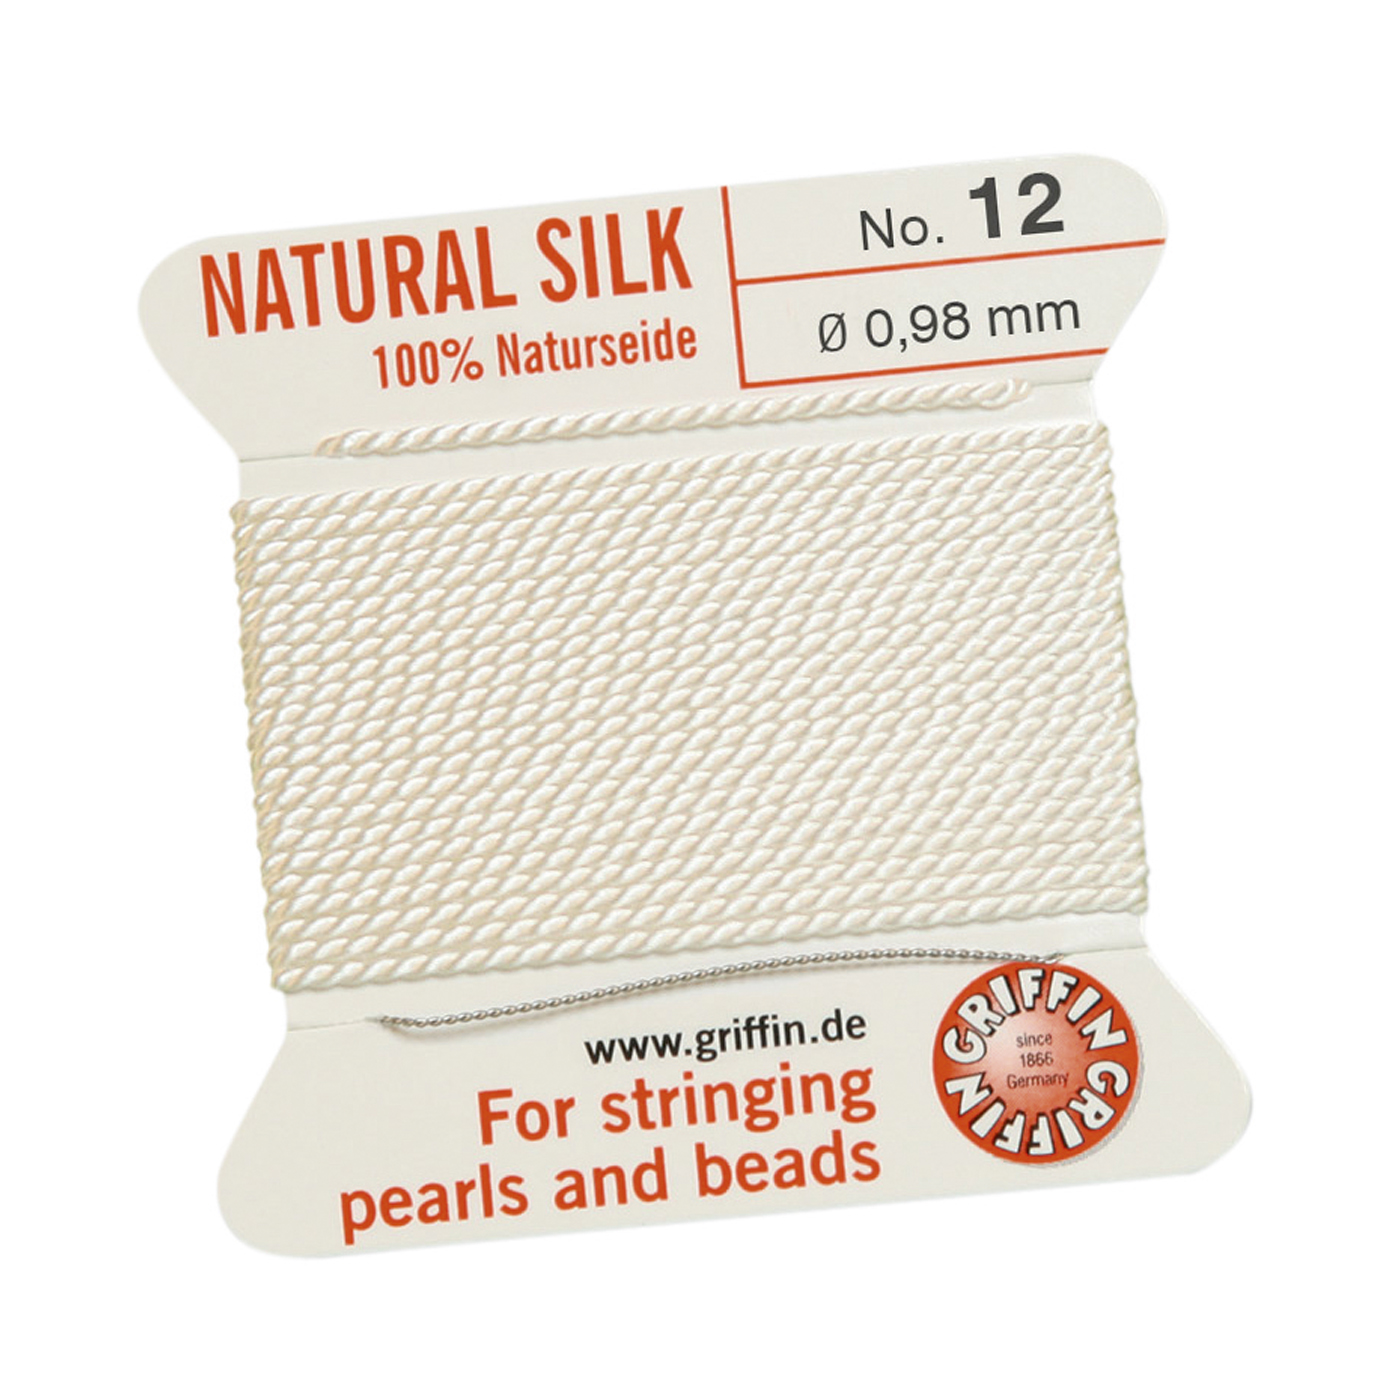 Bead Cord 100% Natural Silk, White, No. 12 - 2 m